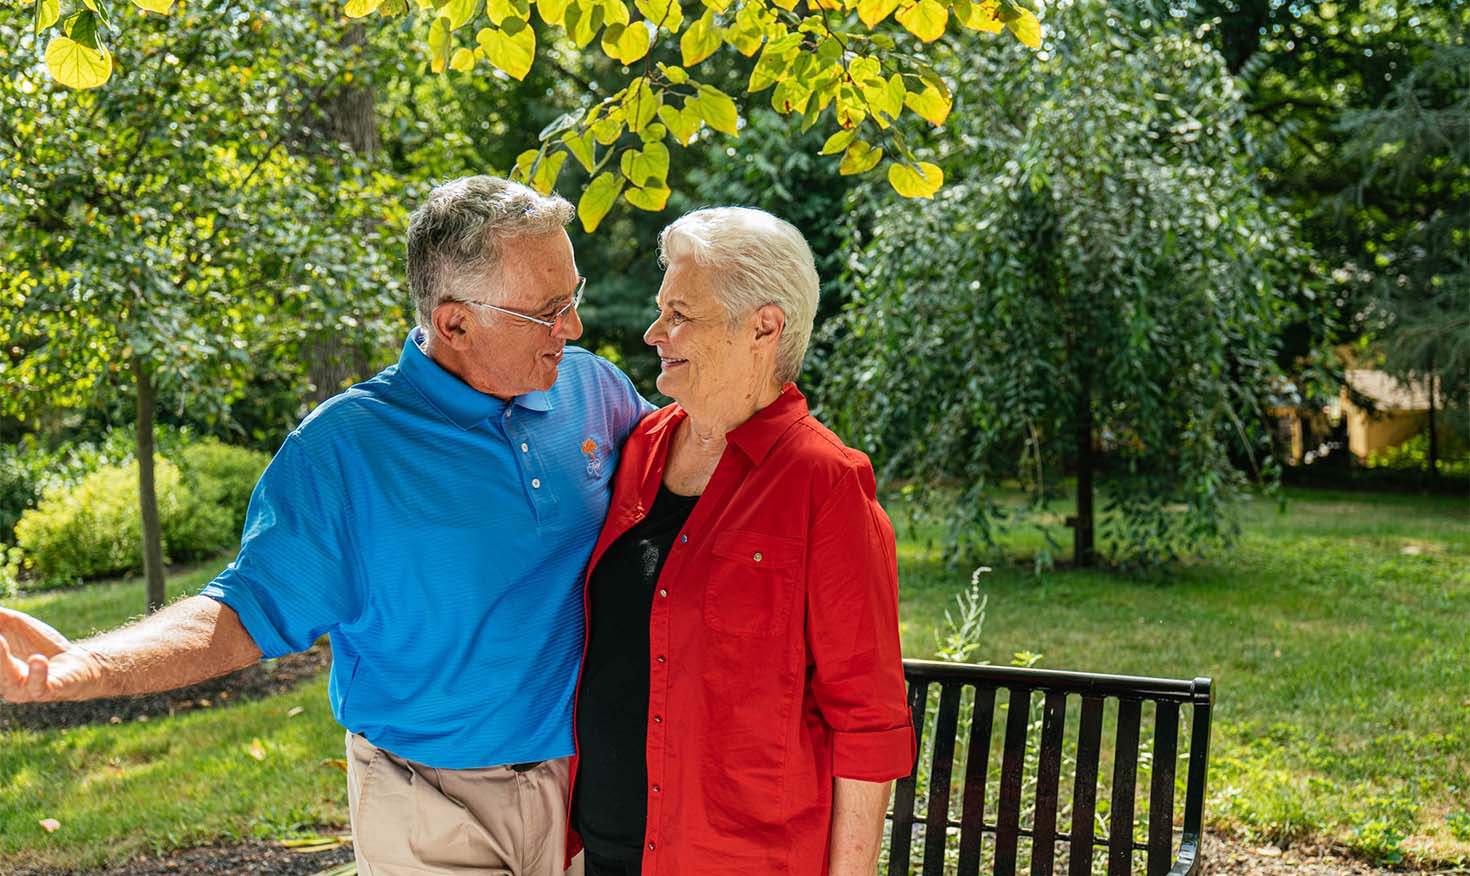 Senior couple smiling outside